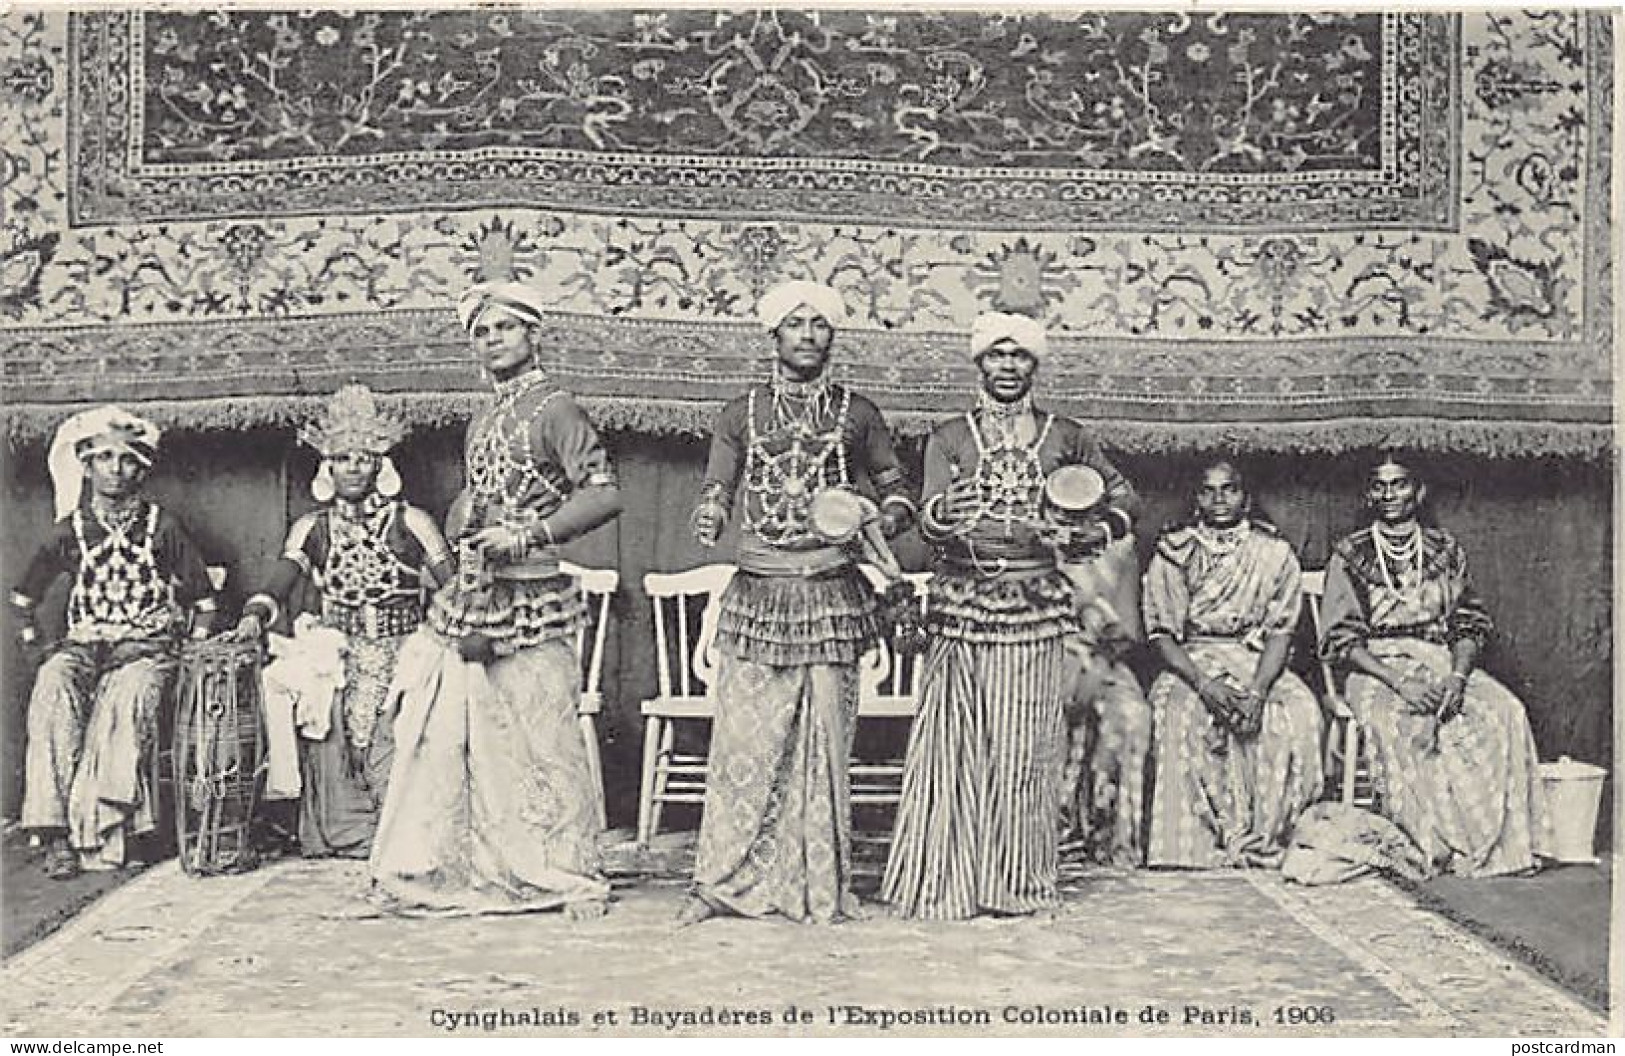 SRI LANKA - Sinhalese People And Bayadere Devadasi Female Dancers At The 1906 Colonial Exhibition In Paris, France - Pub - Sri Lanka (Ceylon)